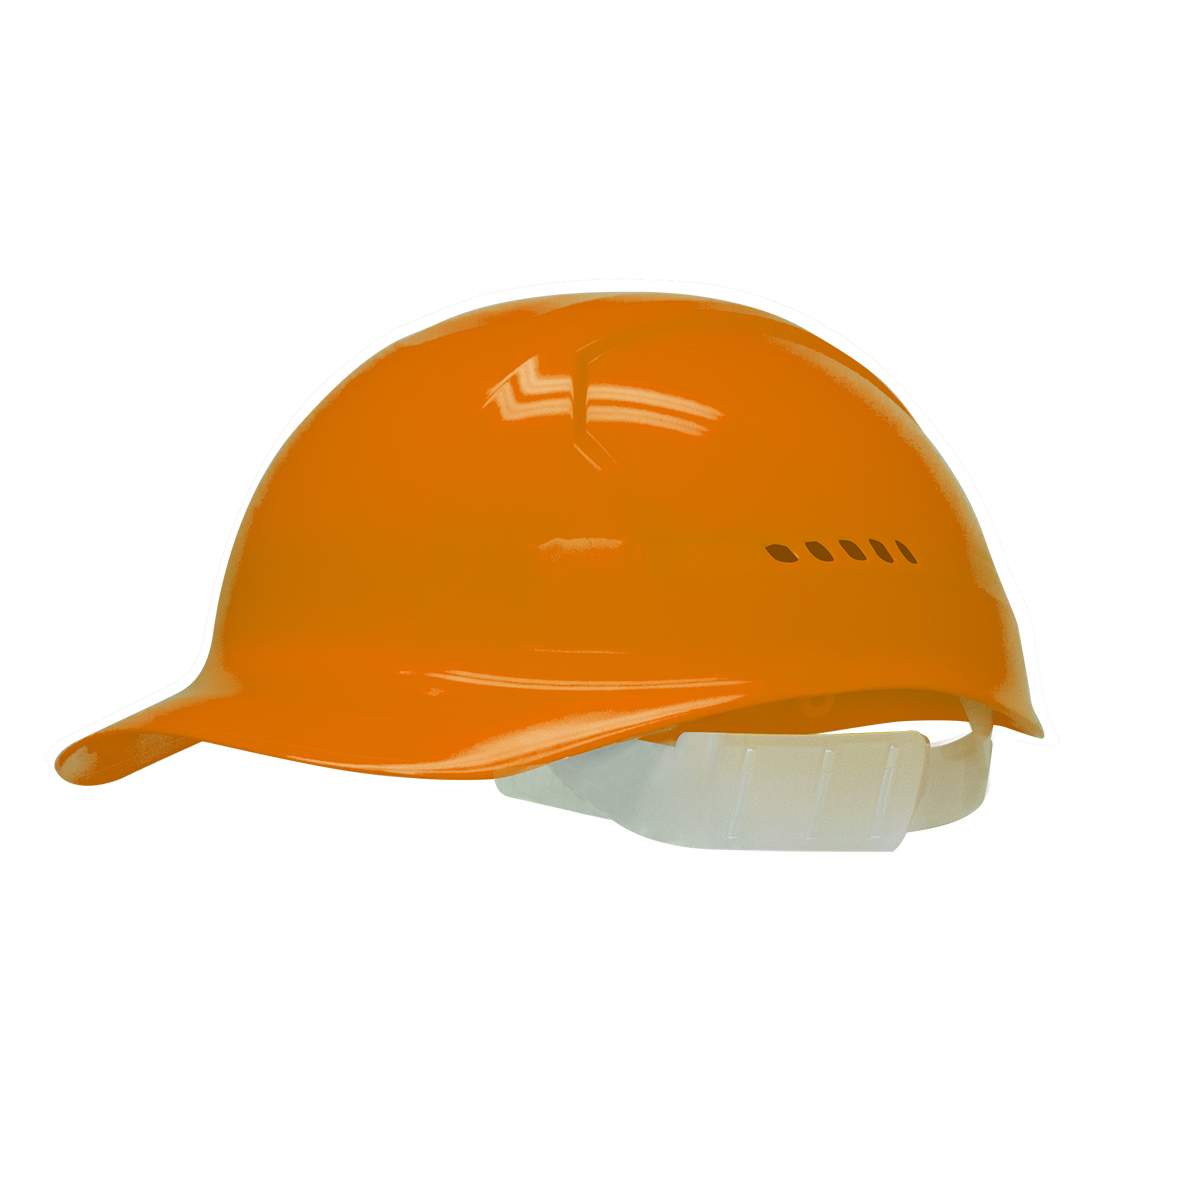 Bullard® Hi-Viz Orange HDPE Cap Style Bump Cap With Slidelock Suspension